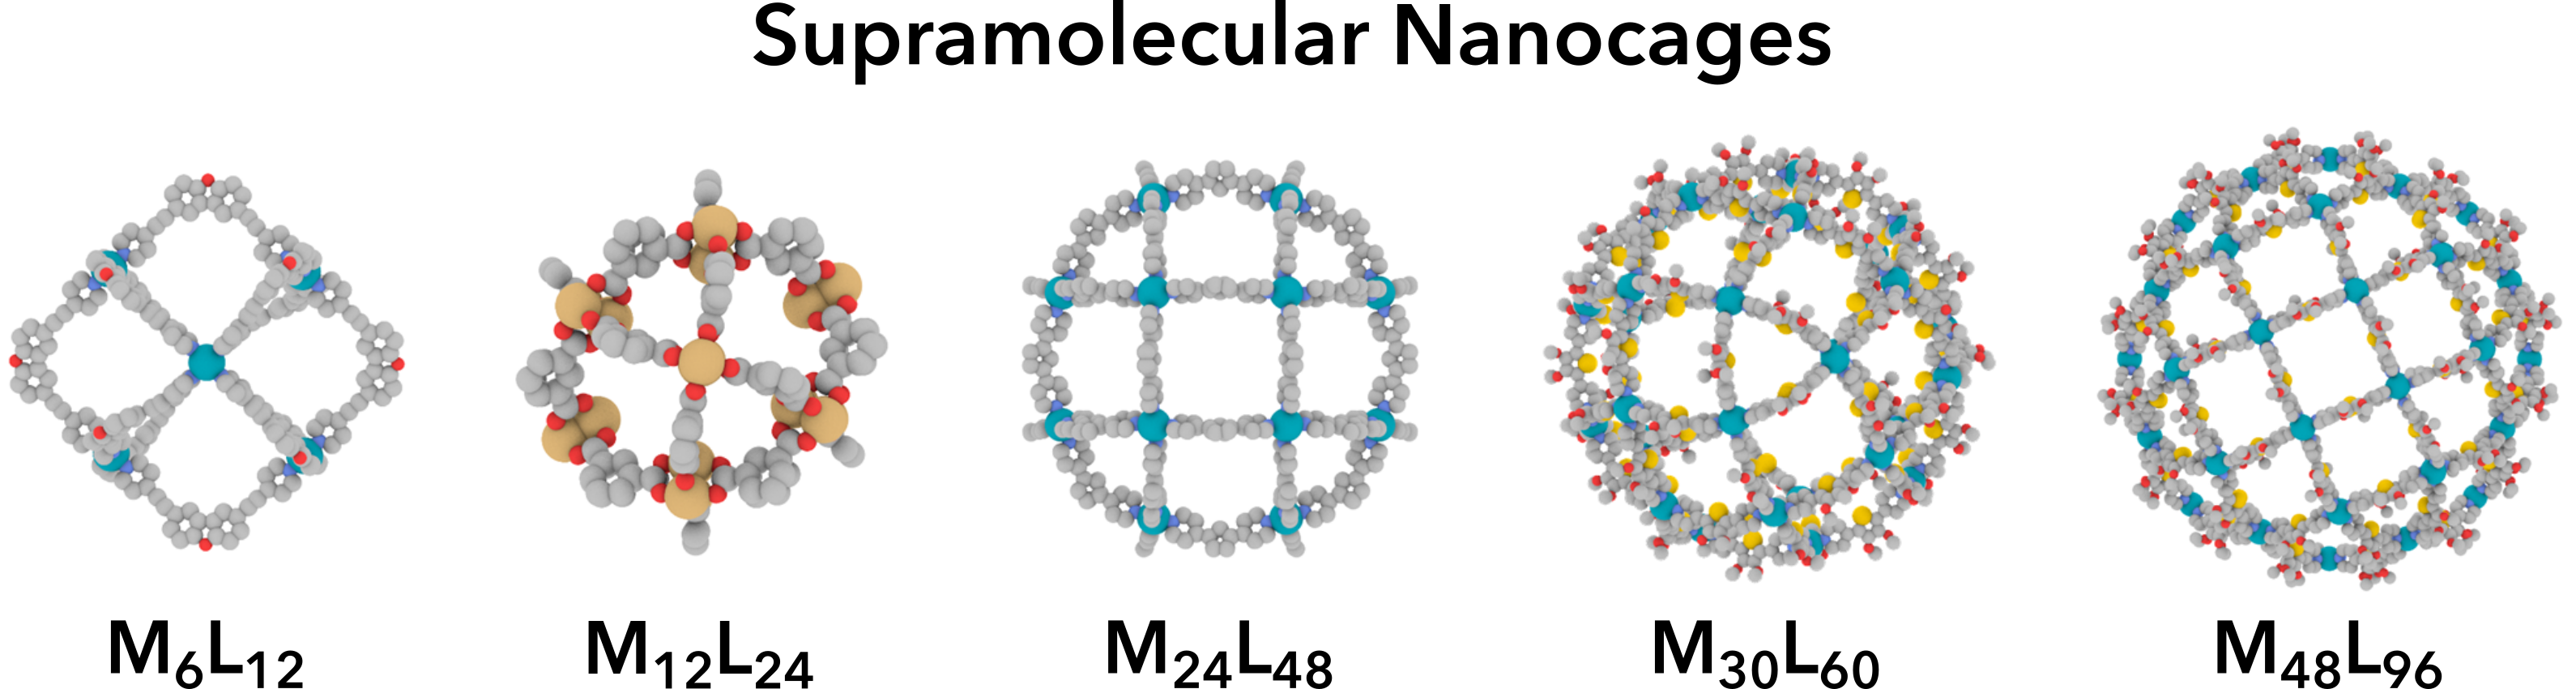 supramolecular-nanocages